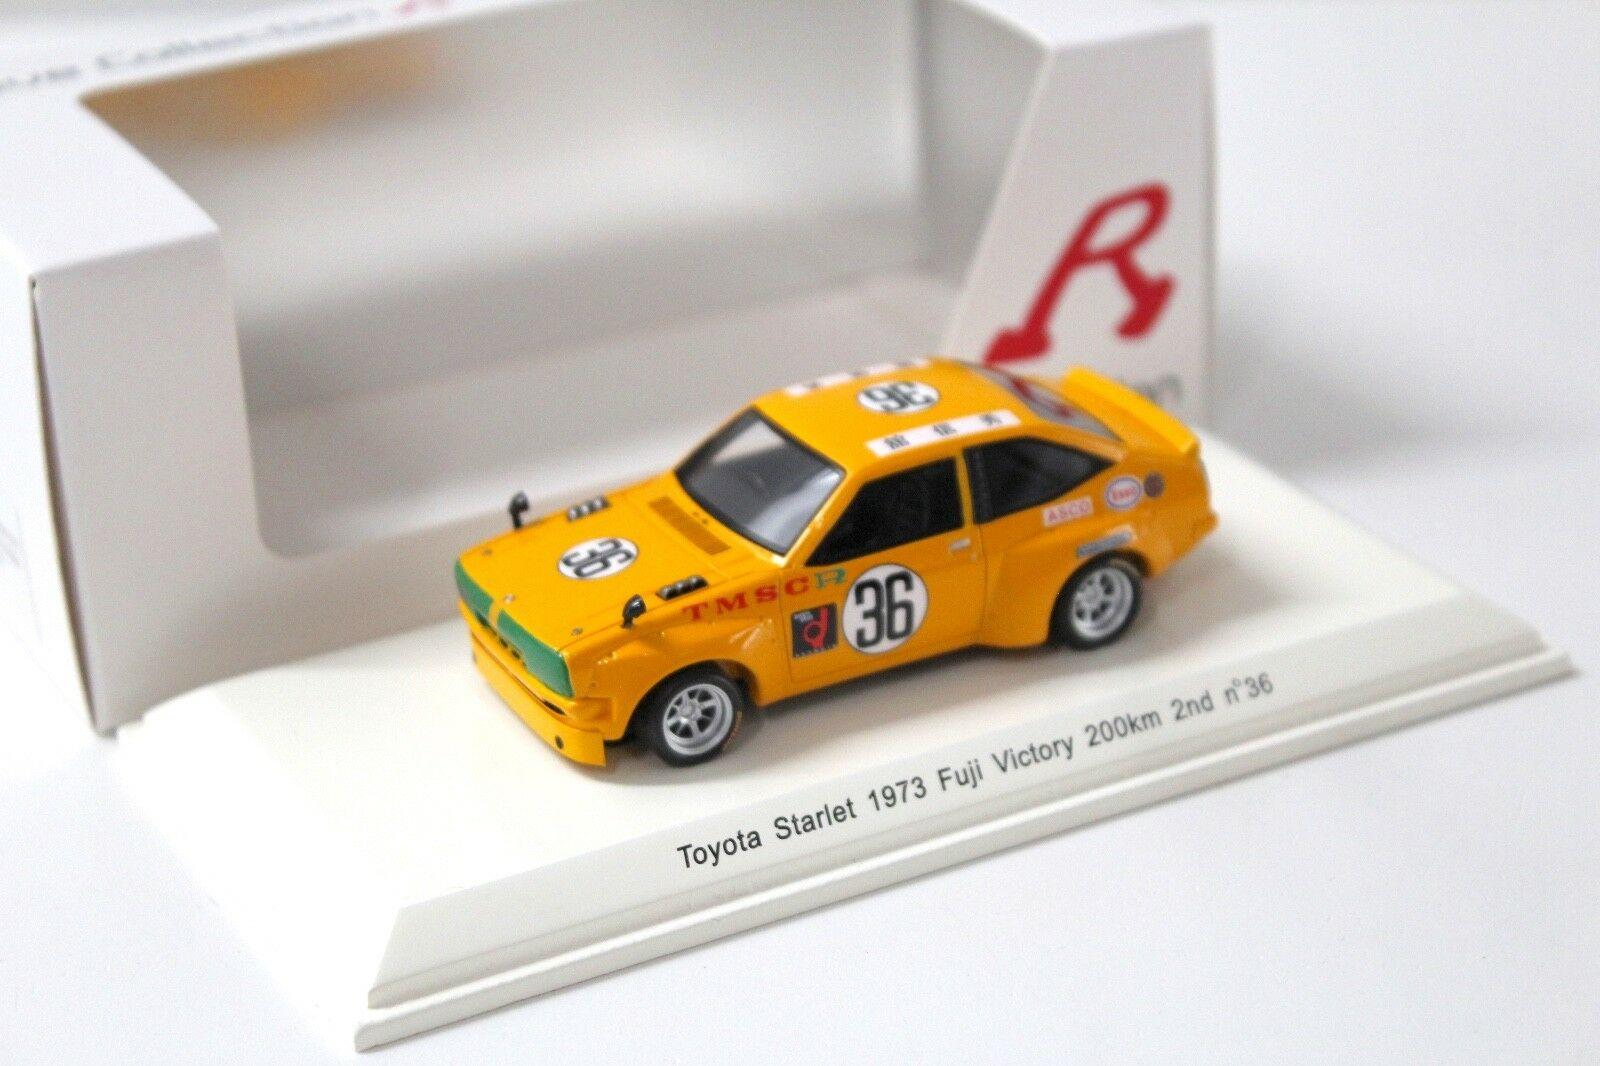 1:43 Spark Toyota Starlet 1973 Fuji Victory 200km #36 orange